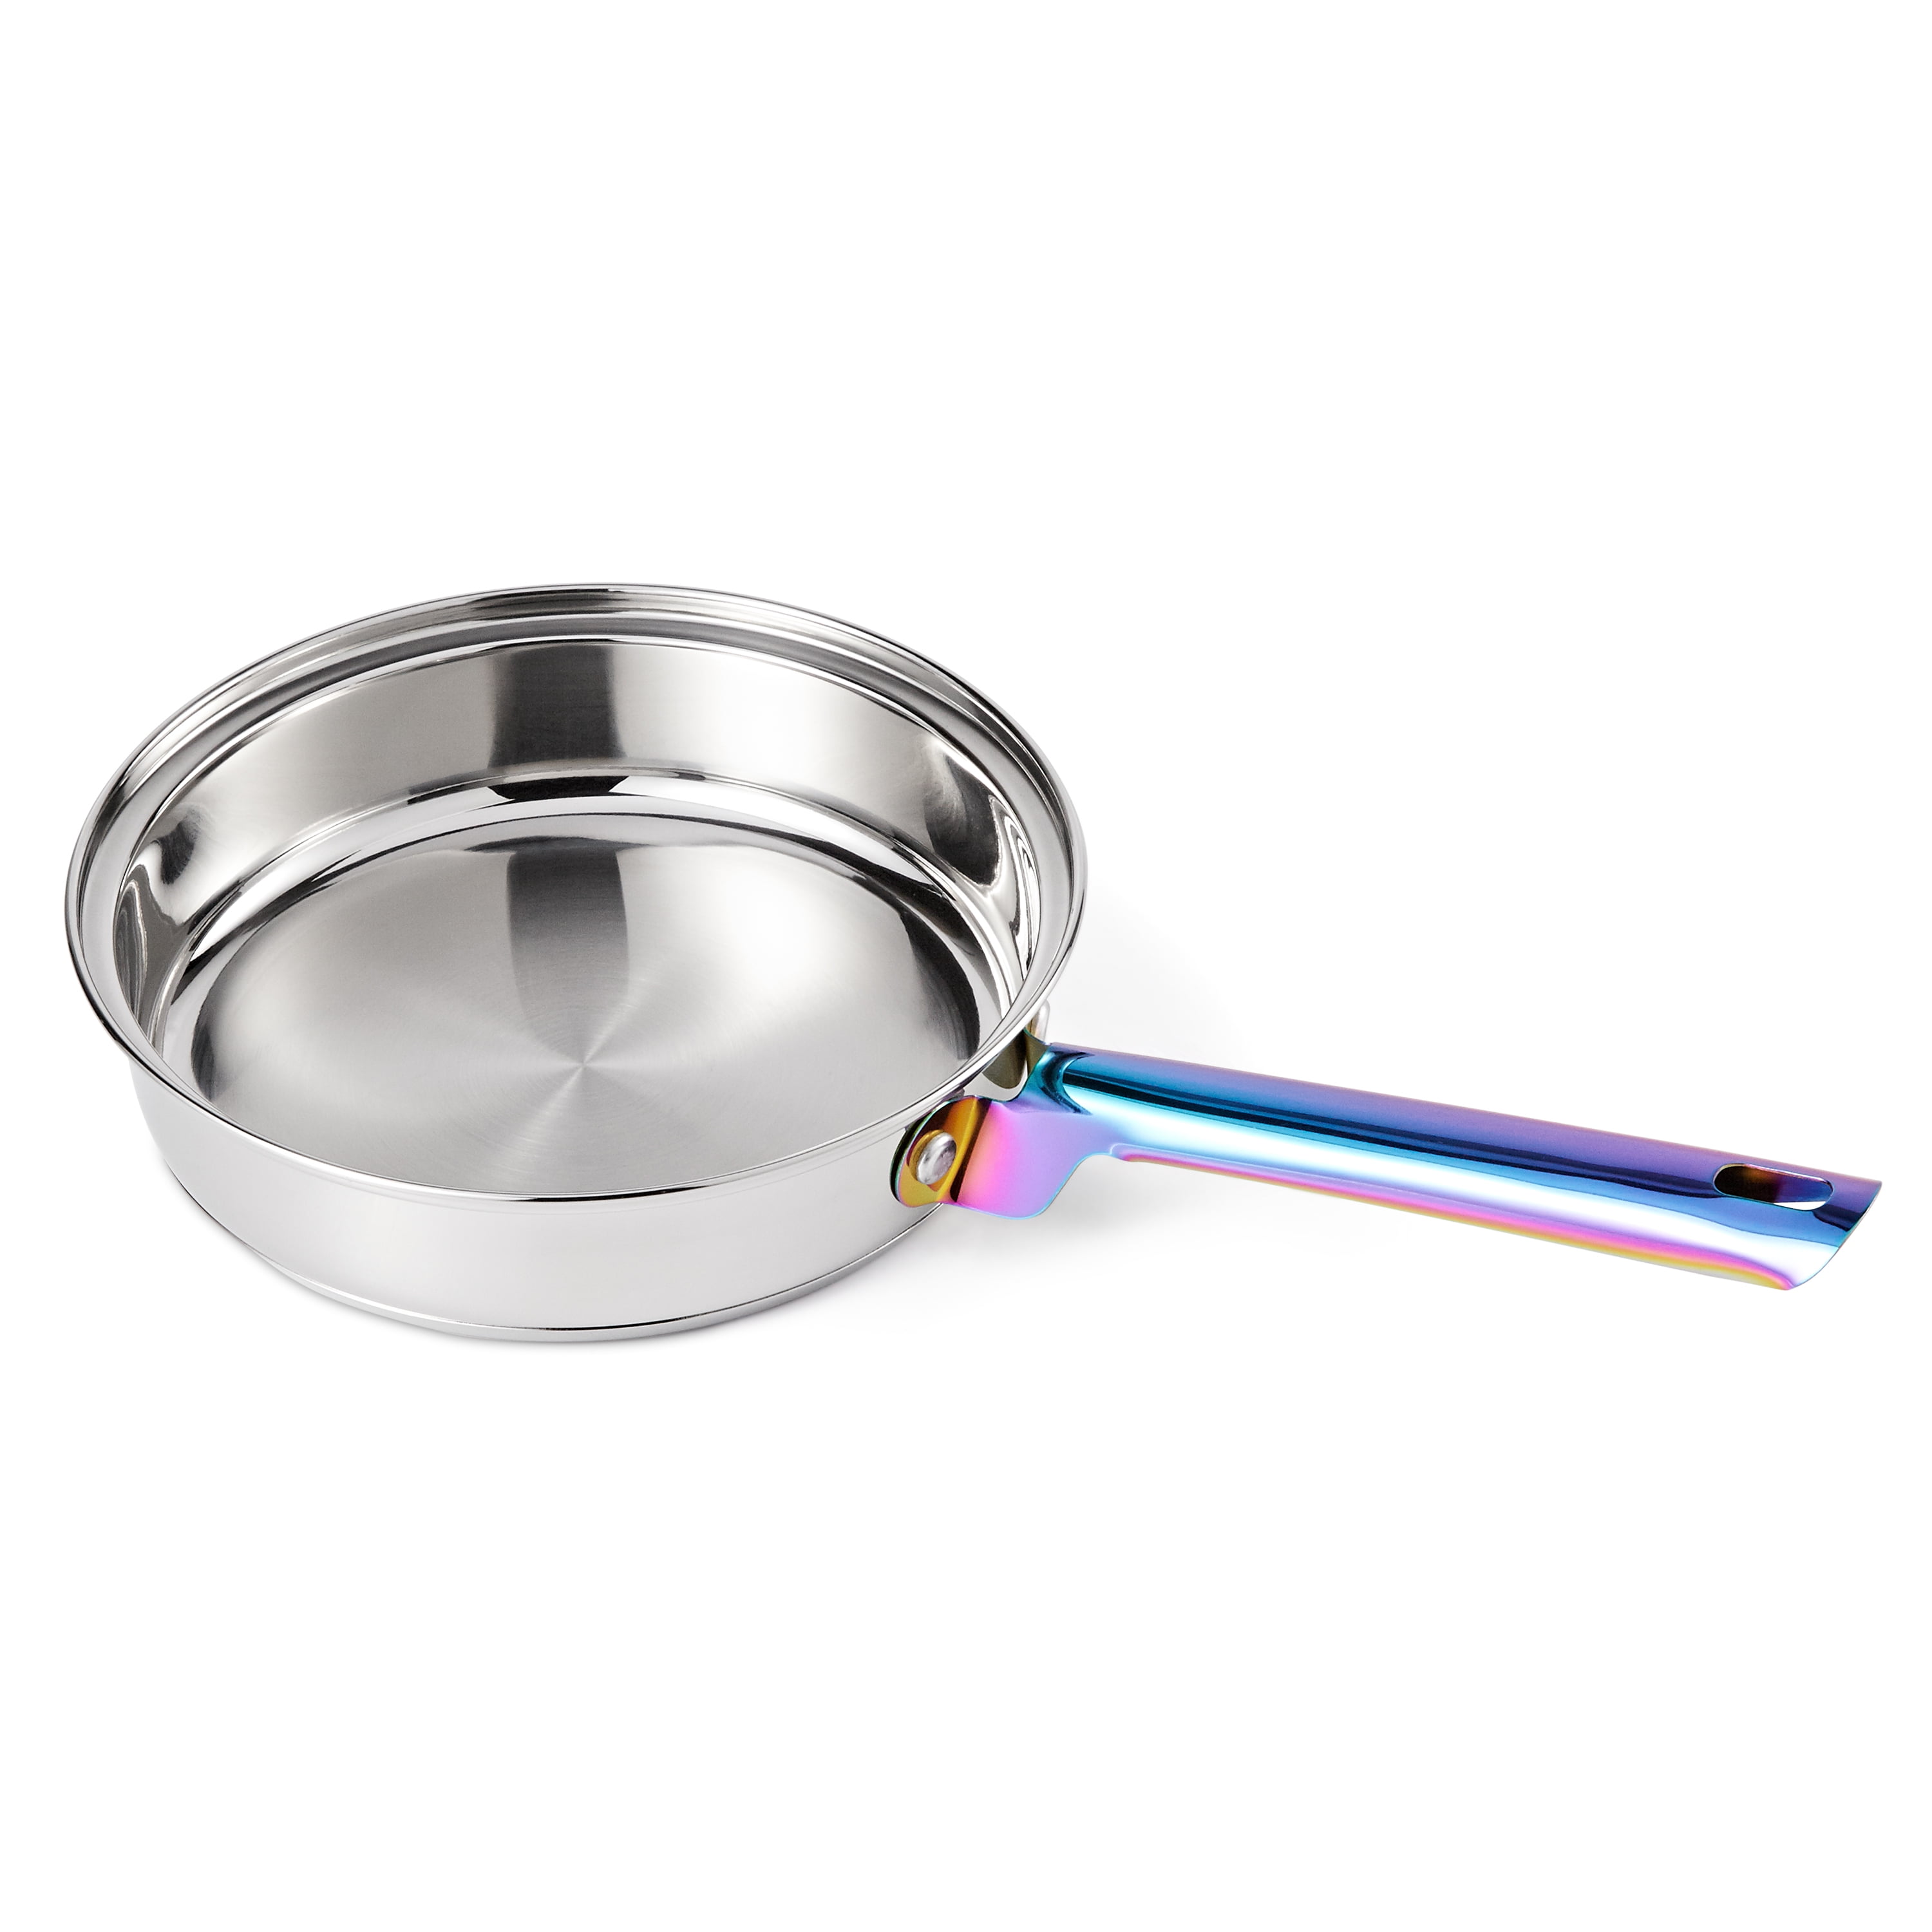 Mainstays Rainbow Iridescent Cookware Set Stainless Steel 20-Piece Utensil Tool 